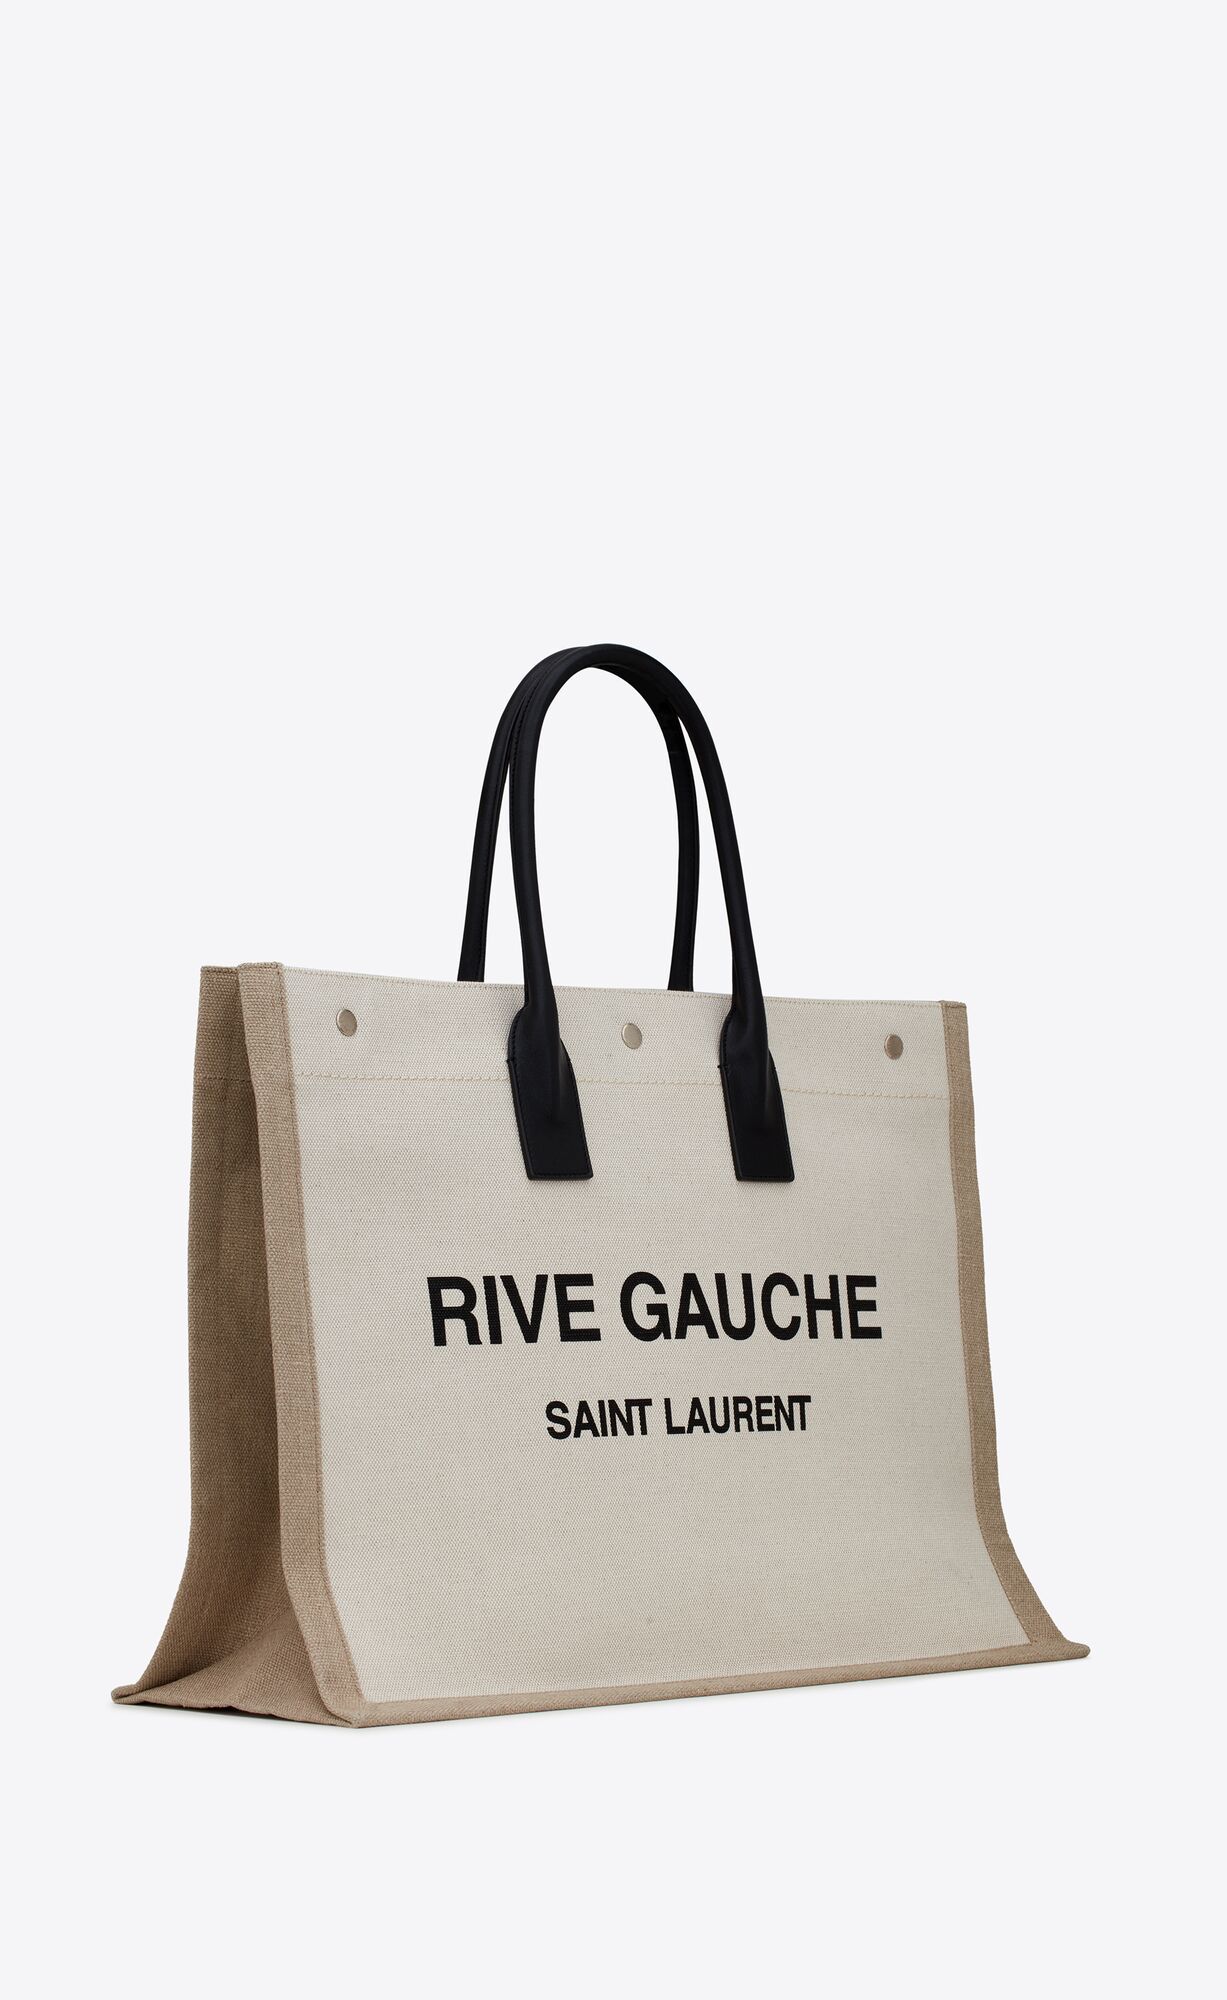 rive gauche tote bag in linen and leather | Saint Laurent | YSL.com | Saint Laurent Inc. (Global)